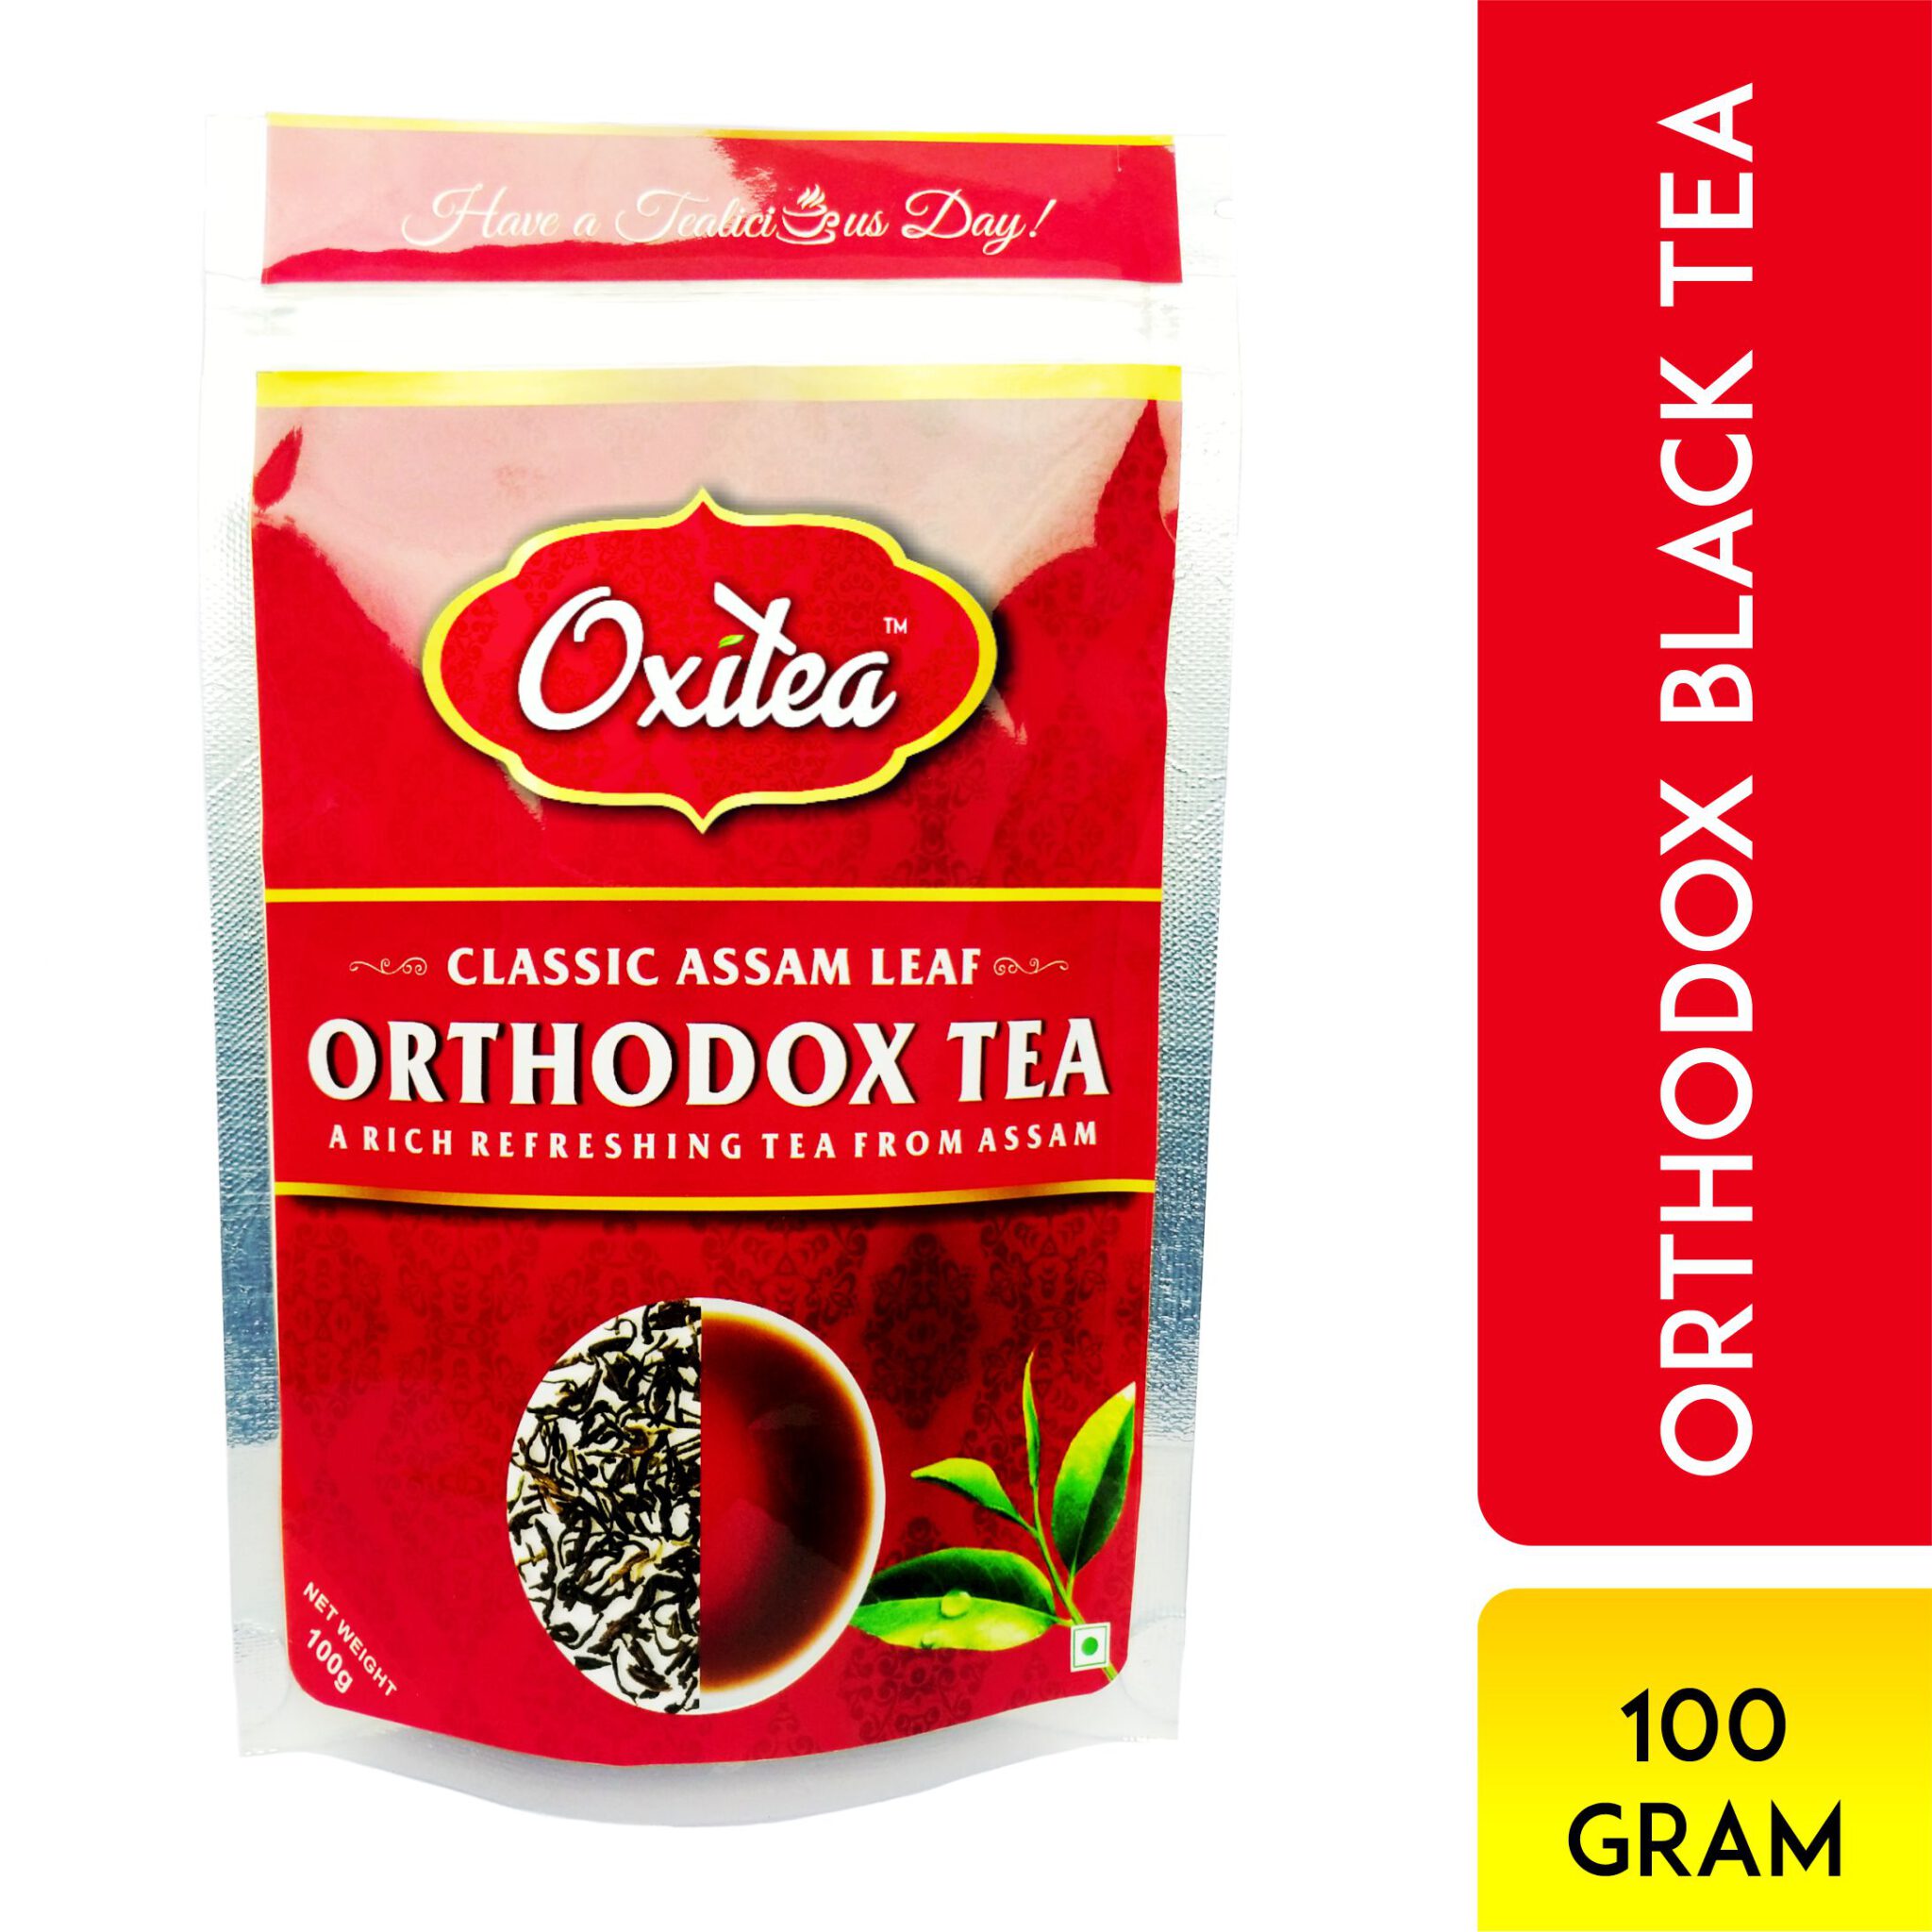 Oxitea Classic Assam Orthodox Black Tea (100g) - Oxitea